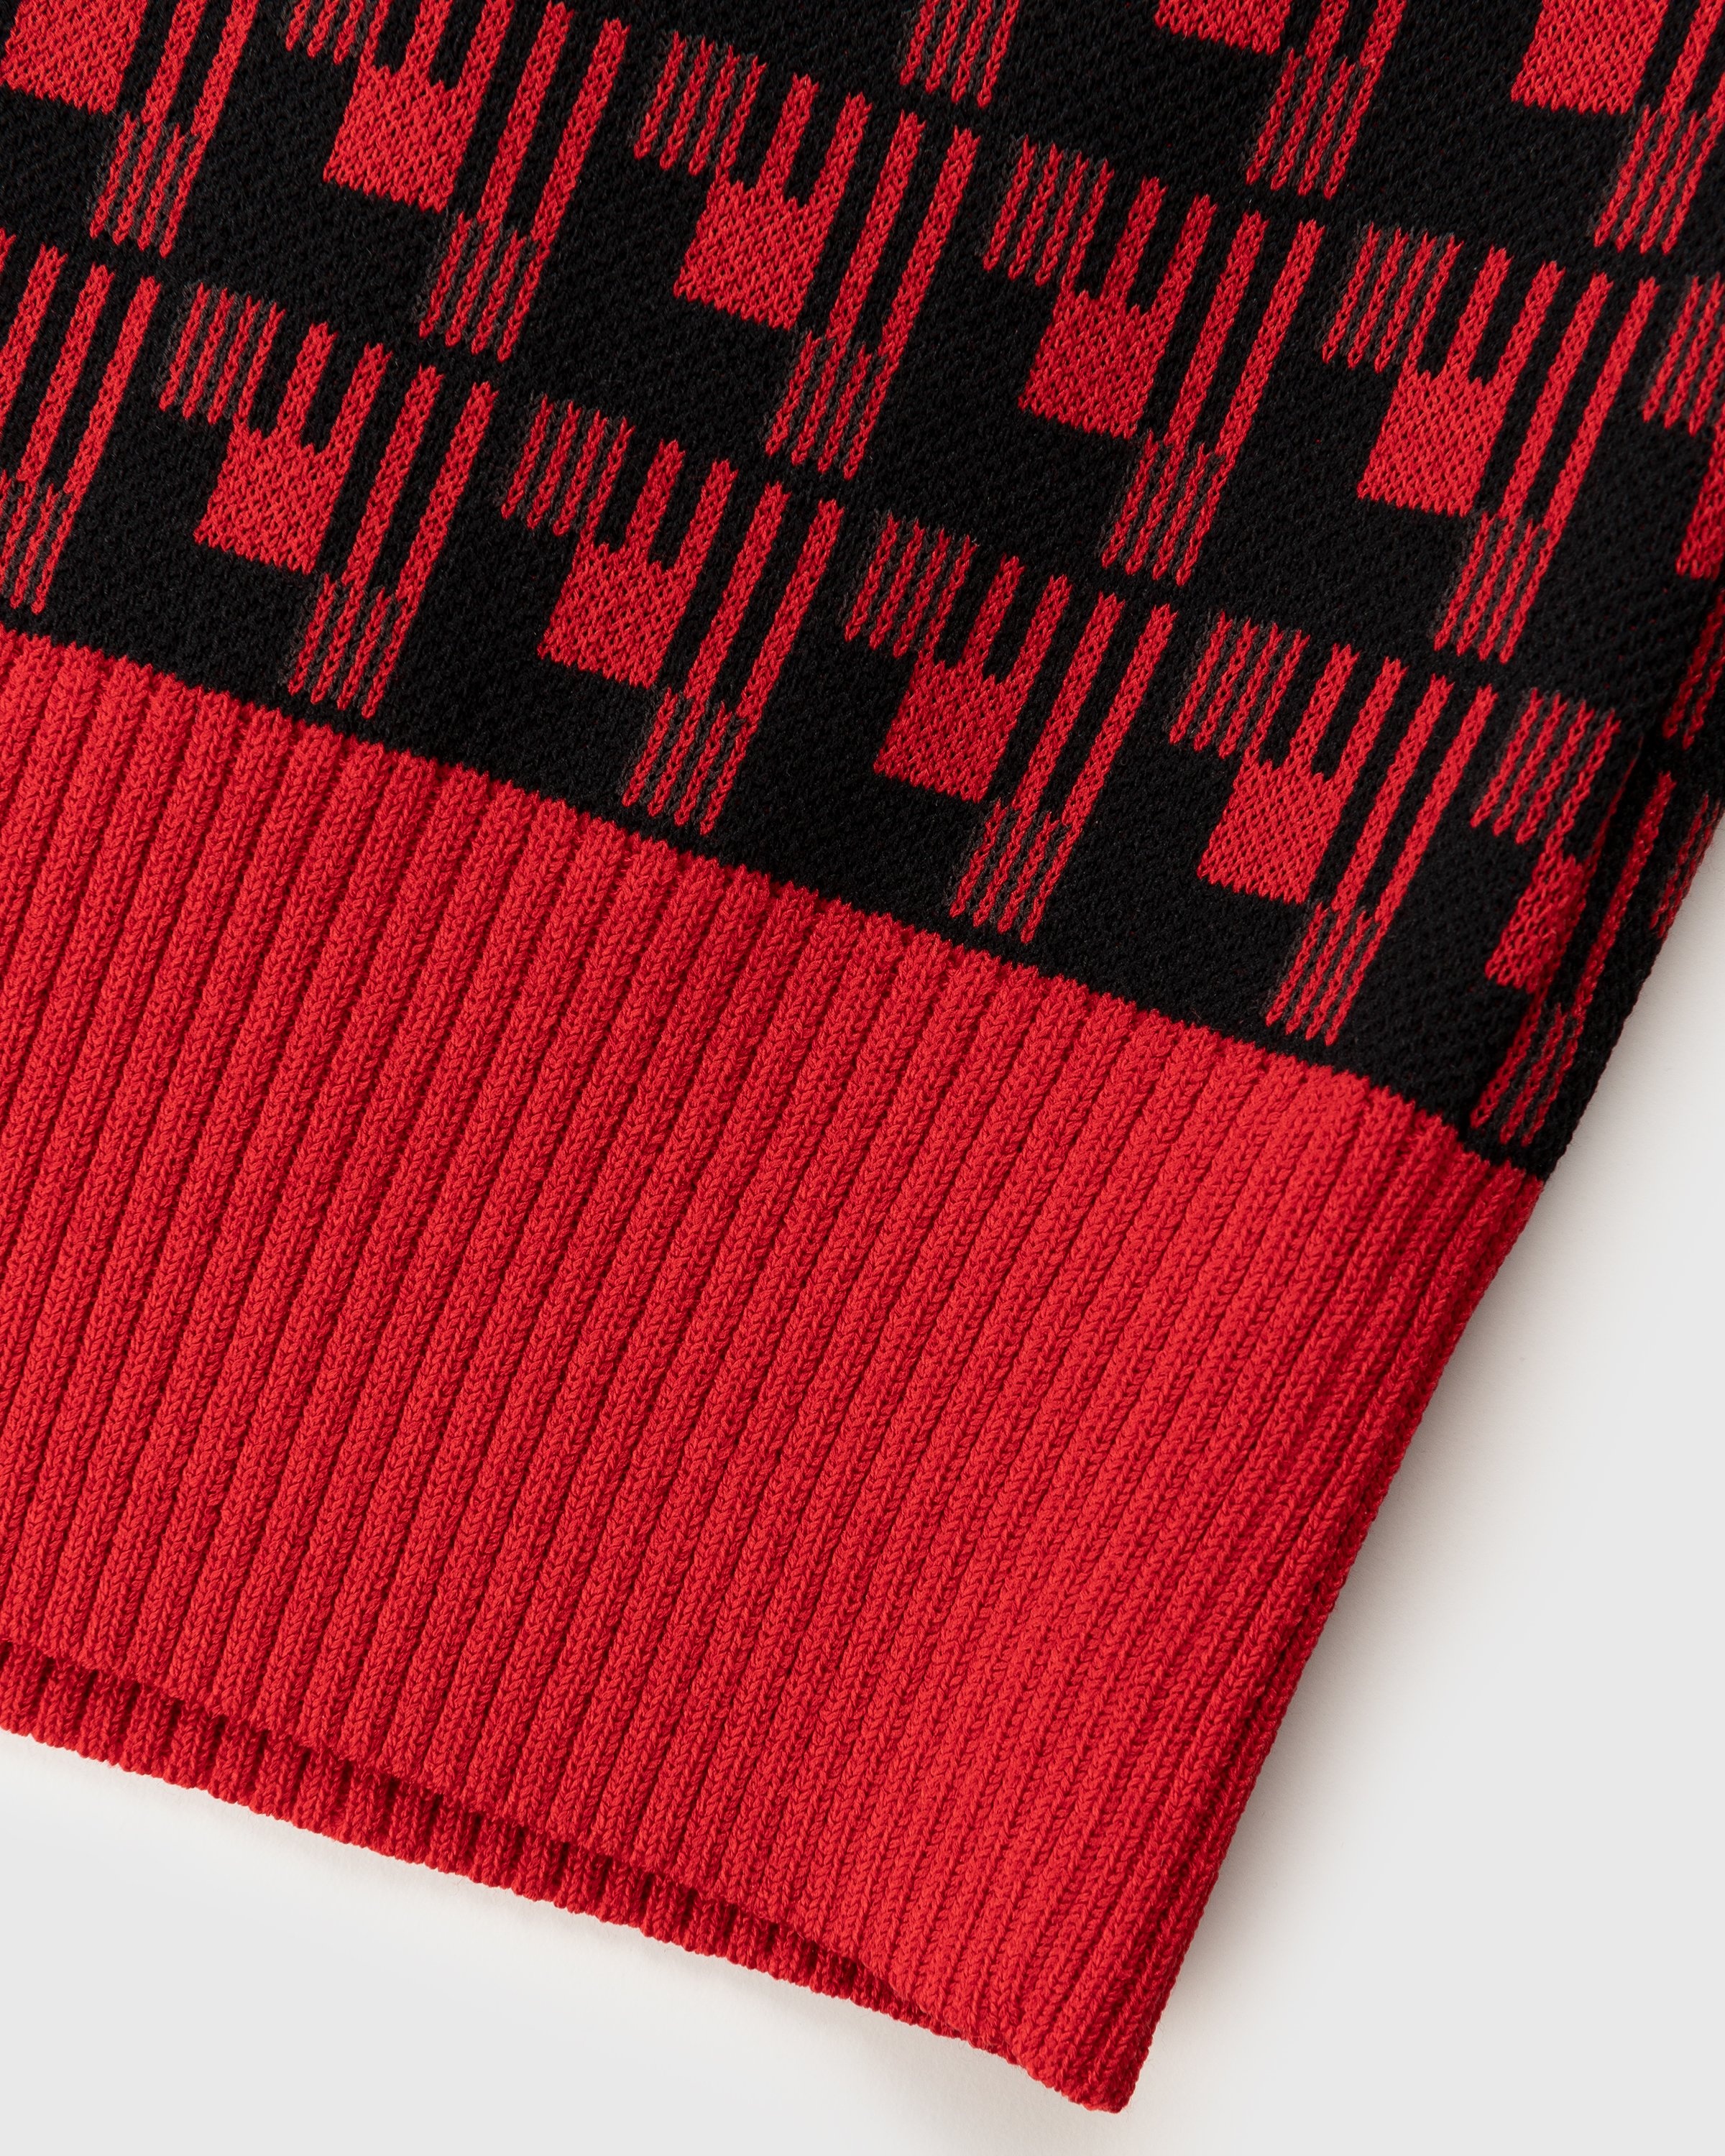 Adidas x Wales Bonner – WB Knit Vest Scarlet/Black - Knitwear - Red - Image 7